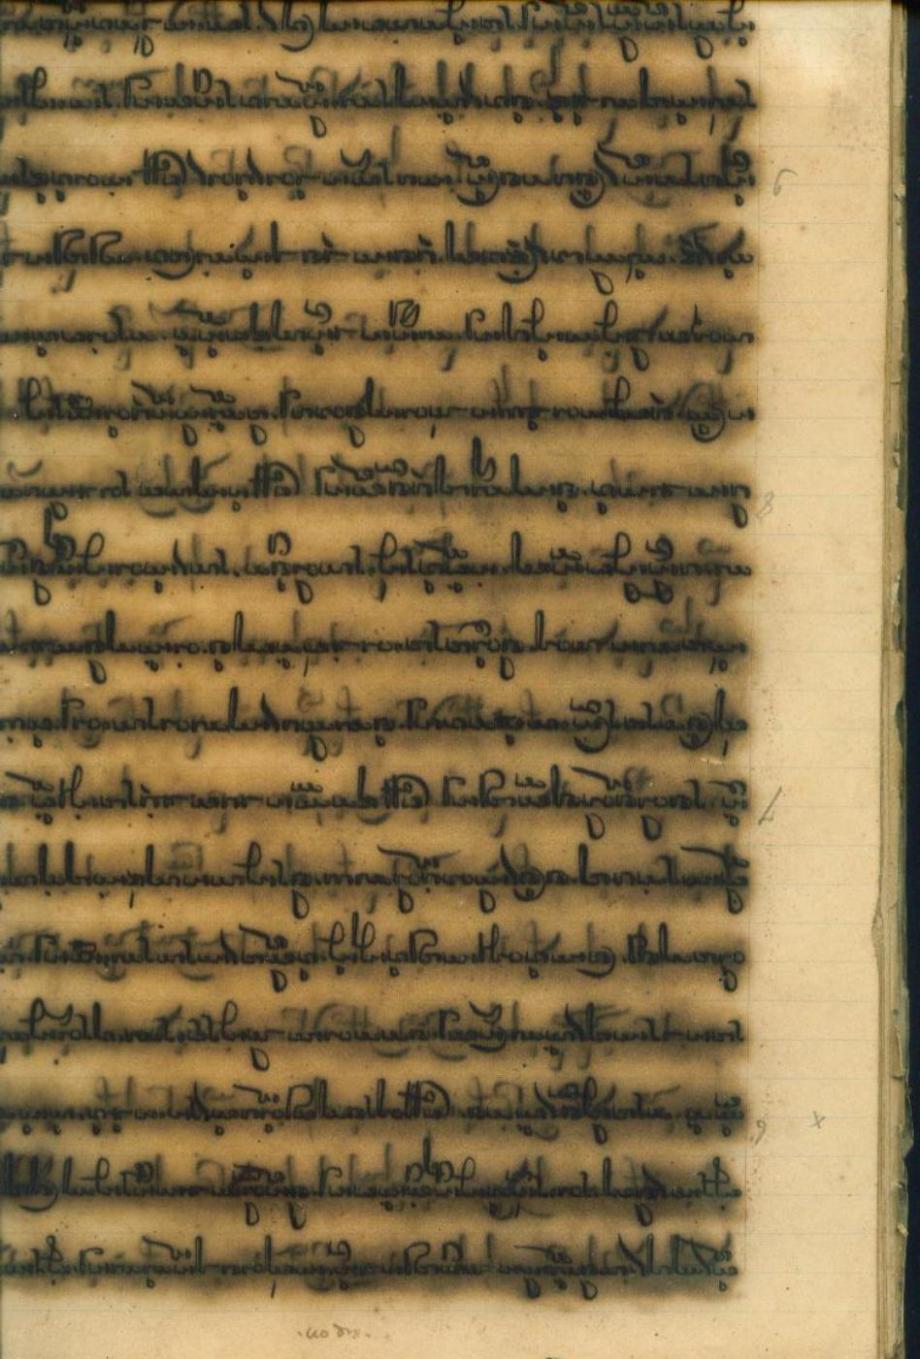 Koleksi Tempo Doeloe: Manuskrip Jawa kuno dari akhir th.1800an